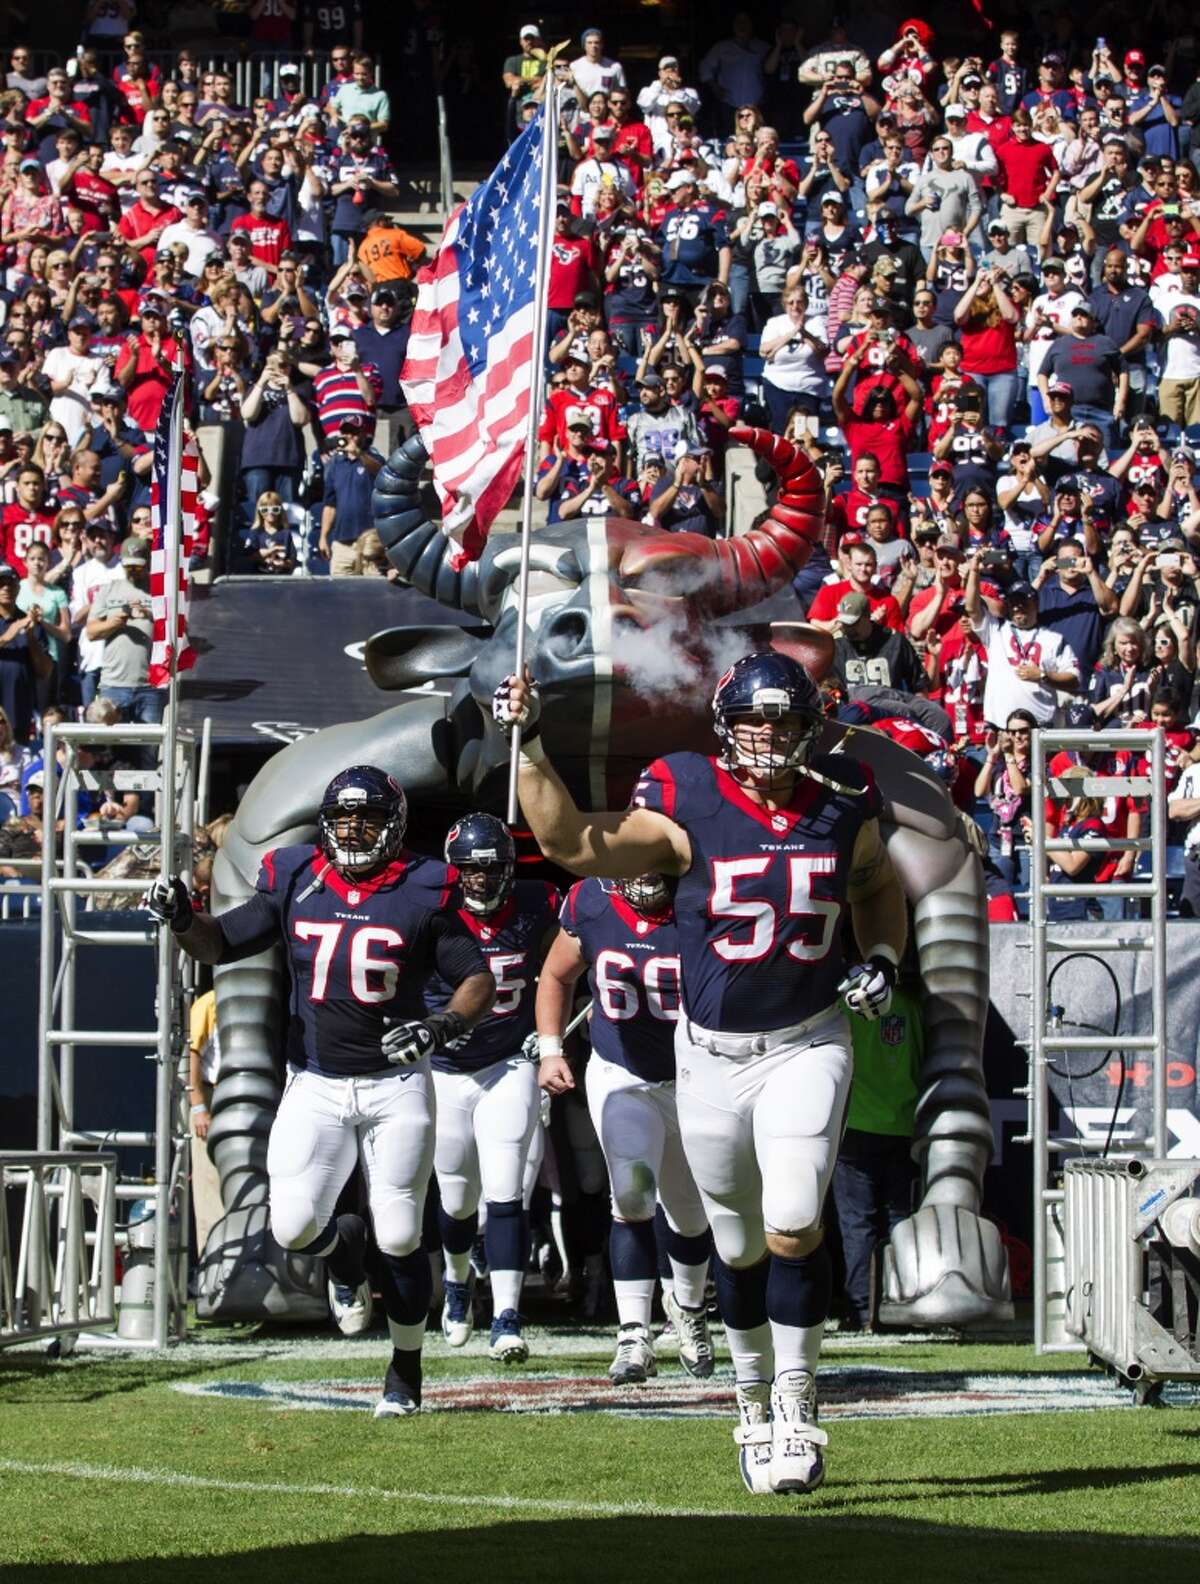 Houston Texans center Chris Myers (55) carries the American flag as he takes the field before an NFL football game against the Cincinnati Bengals at NRG Stadium on Sunday, Nov. 23, 2014, in Houston. ( Brett Coomer / Houston Chronicle )